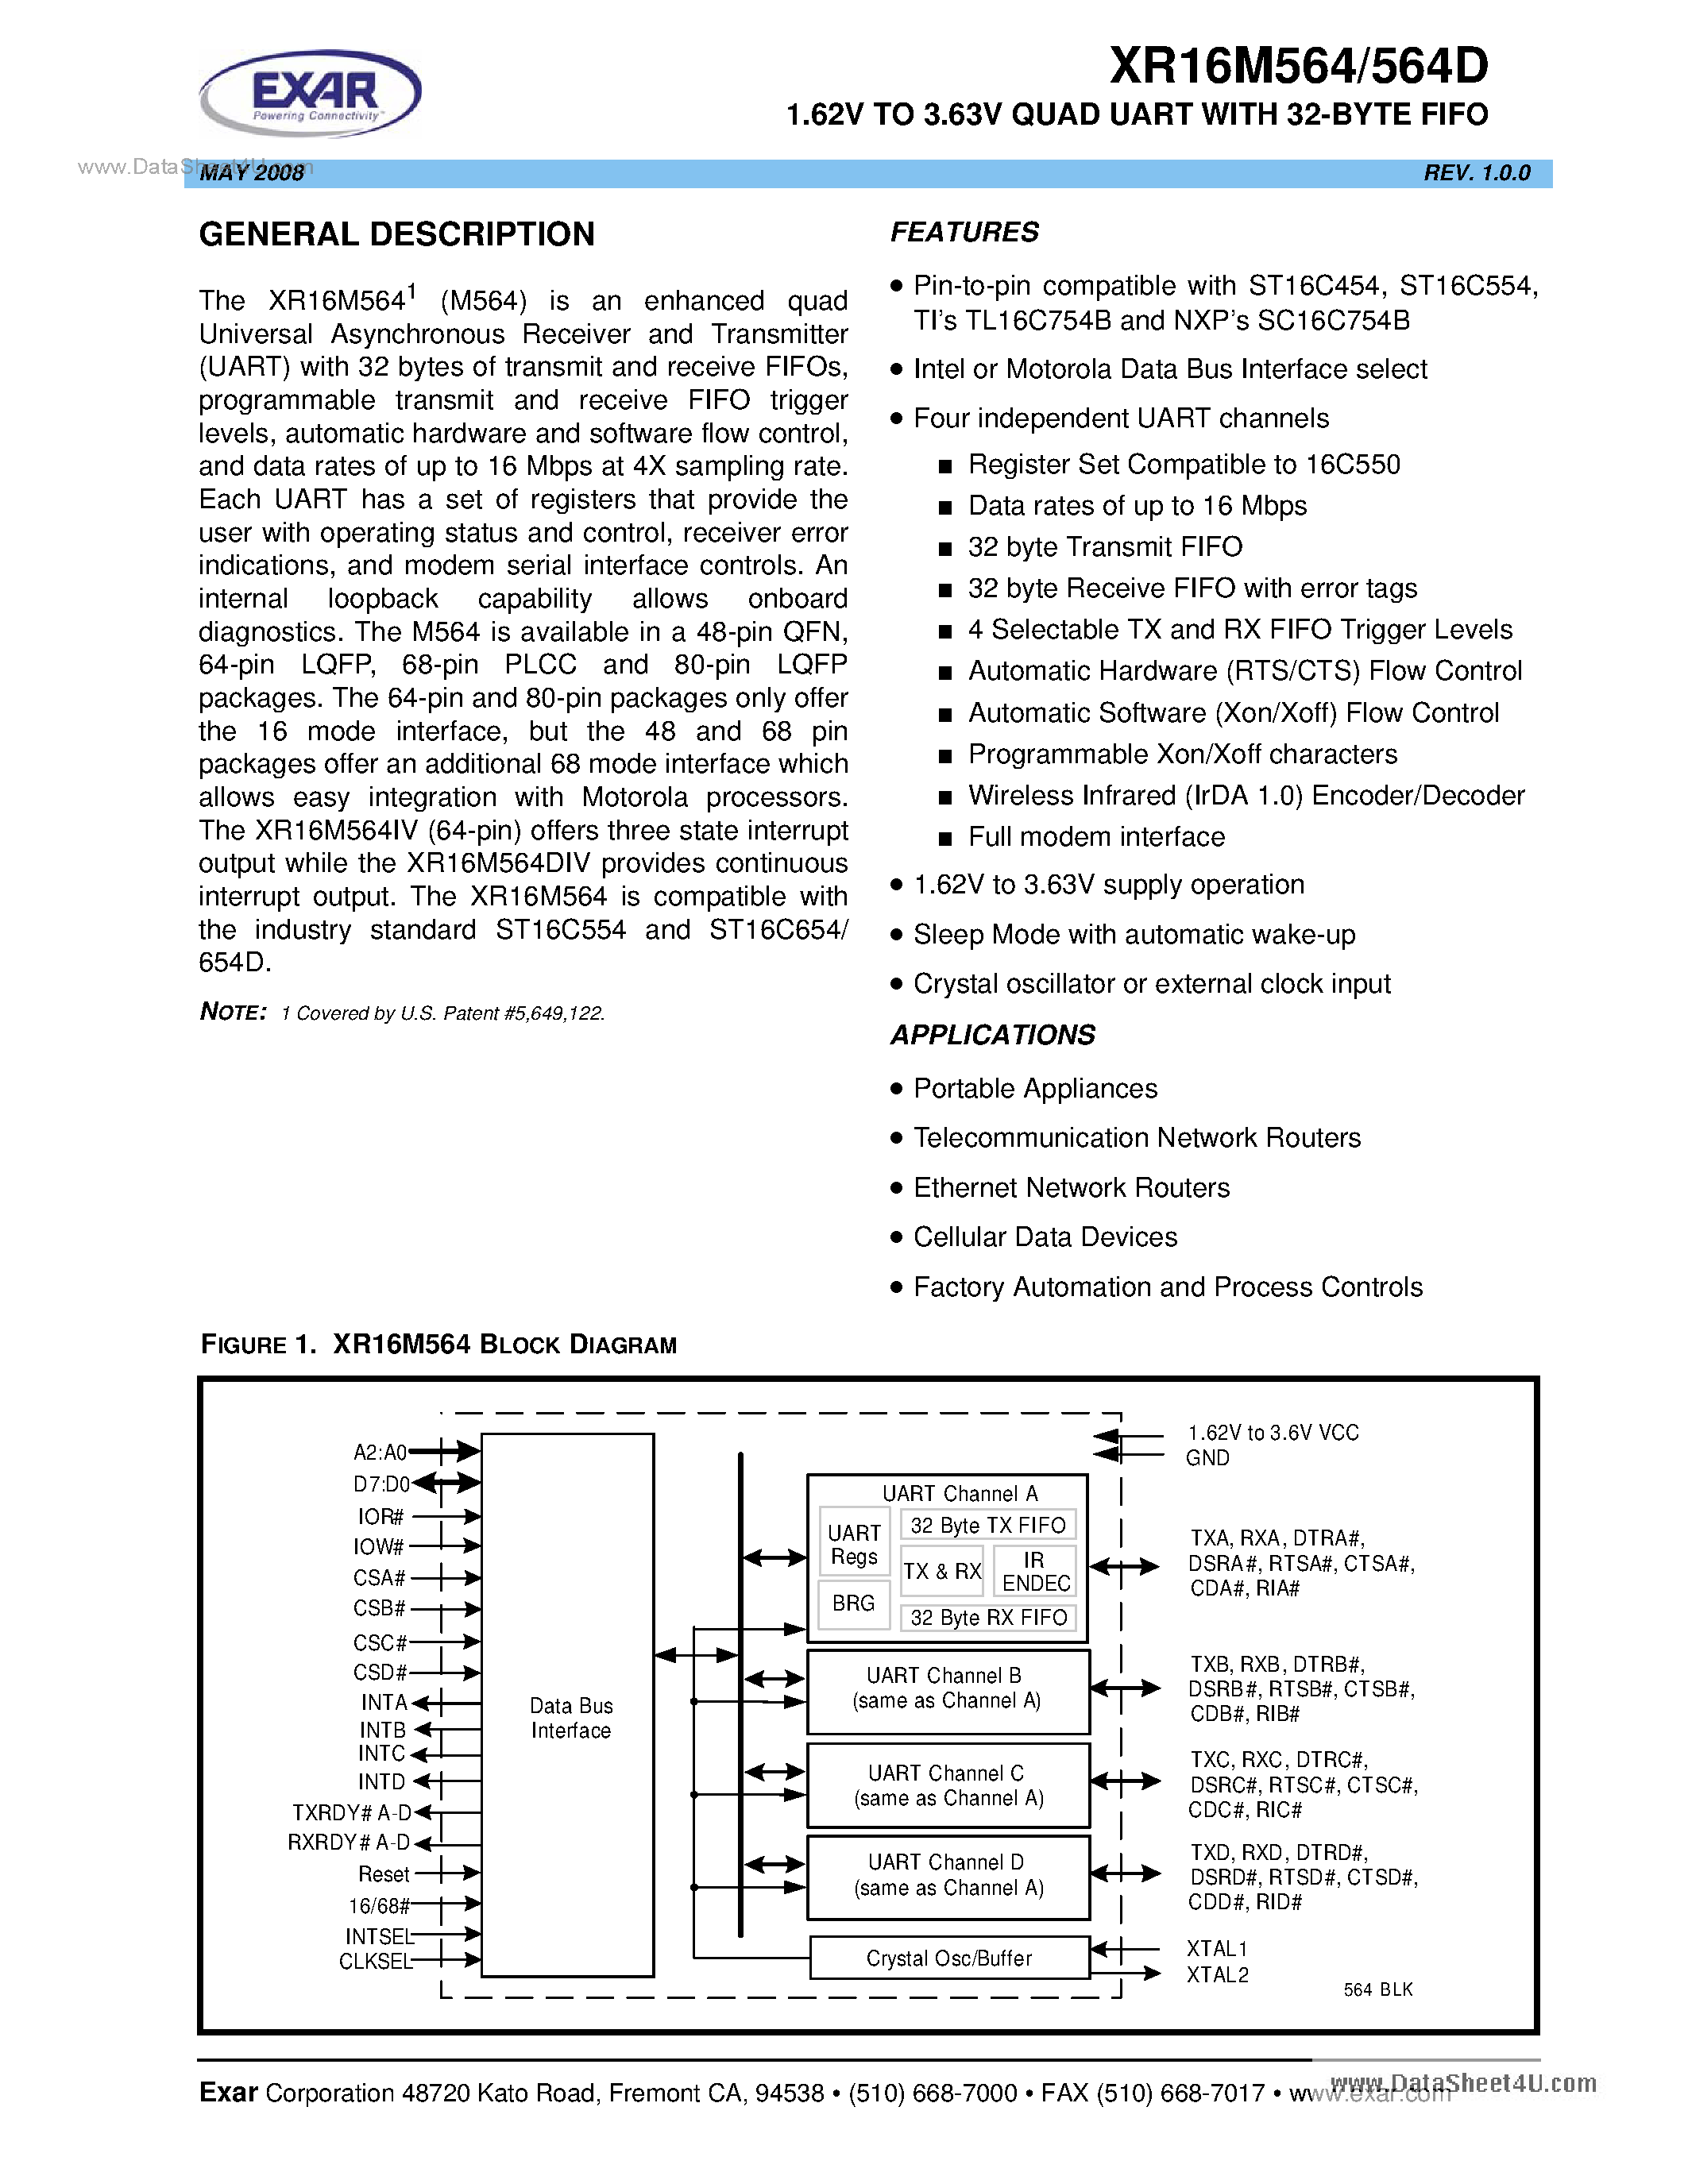 Datasheet XR16M564 - 1.62V TO 3.63V Quad UART page 1